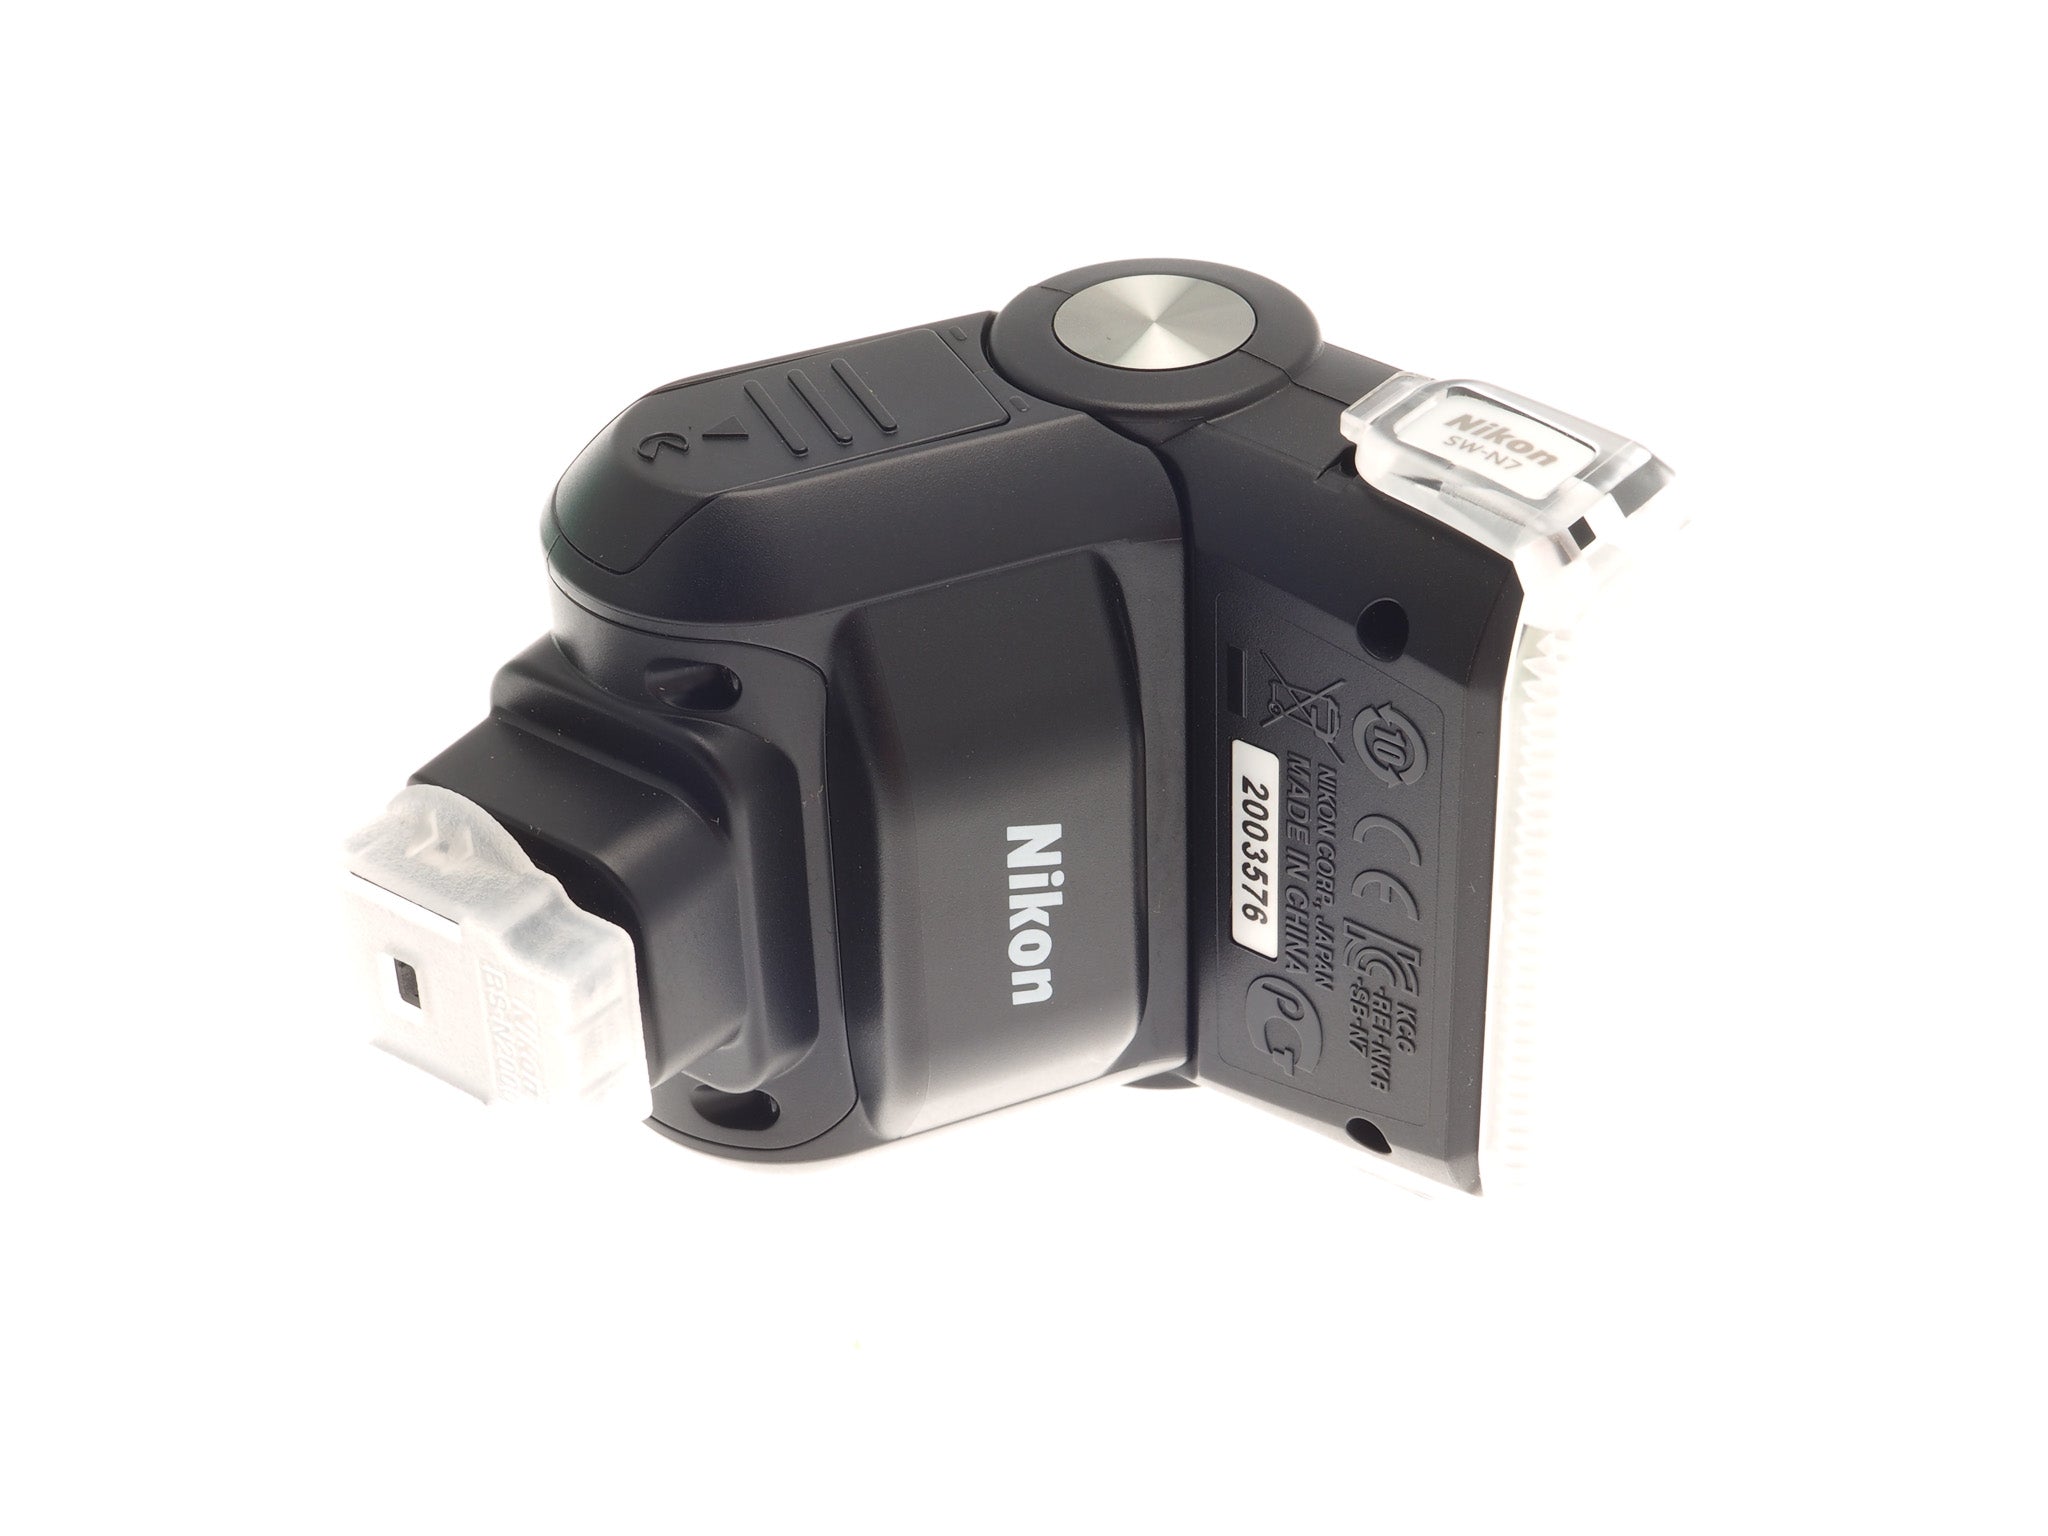 Nikon SB-N7 Speedlight - Accessory